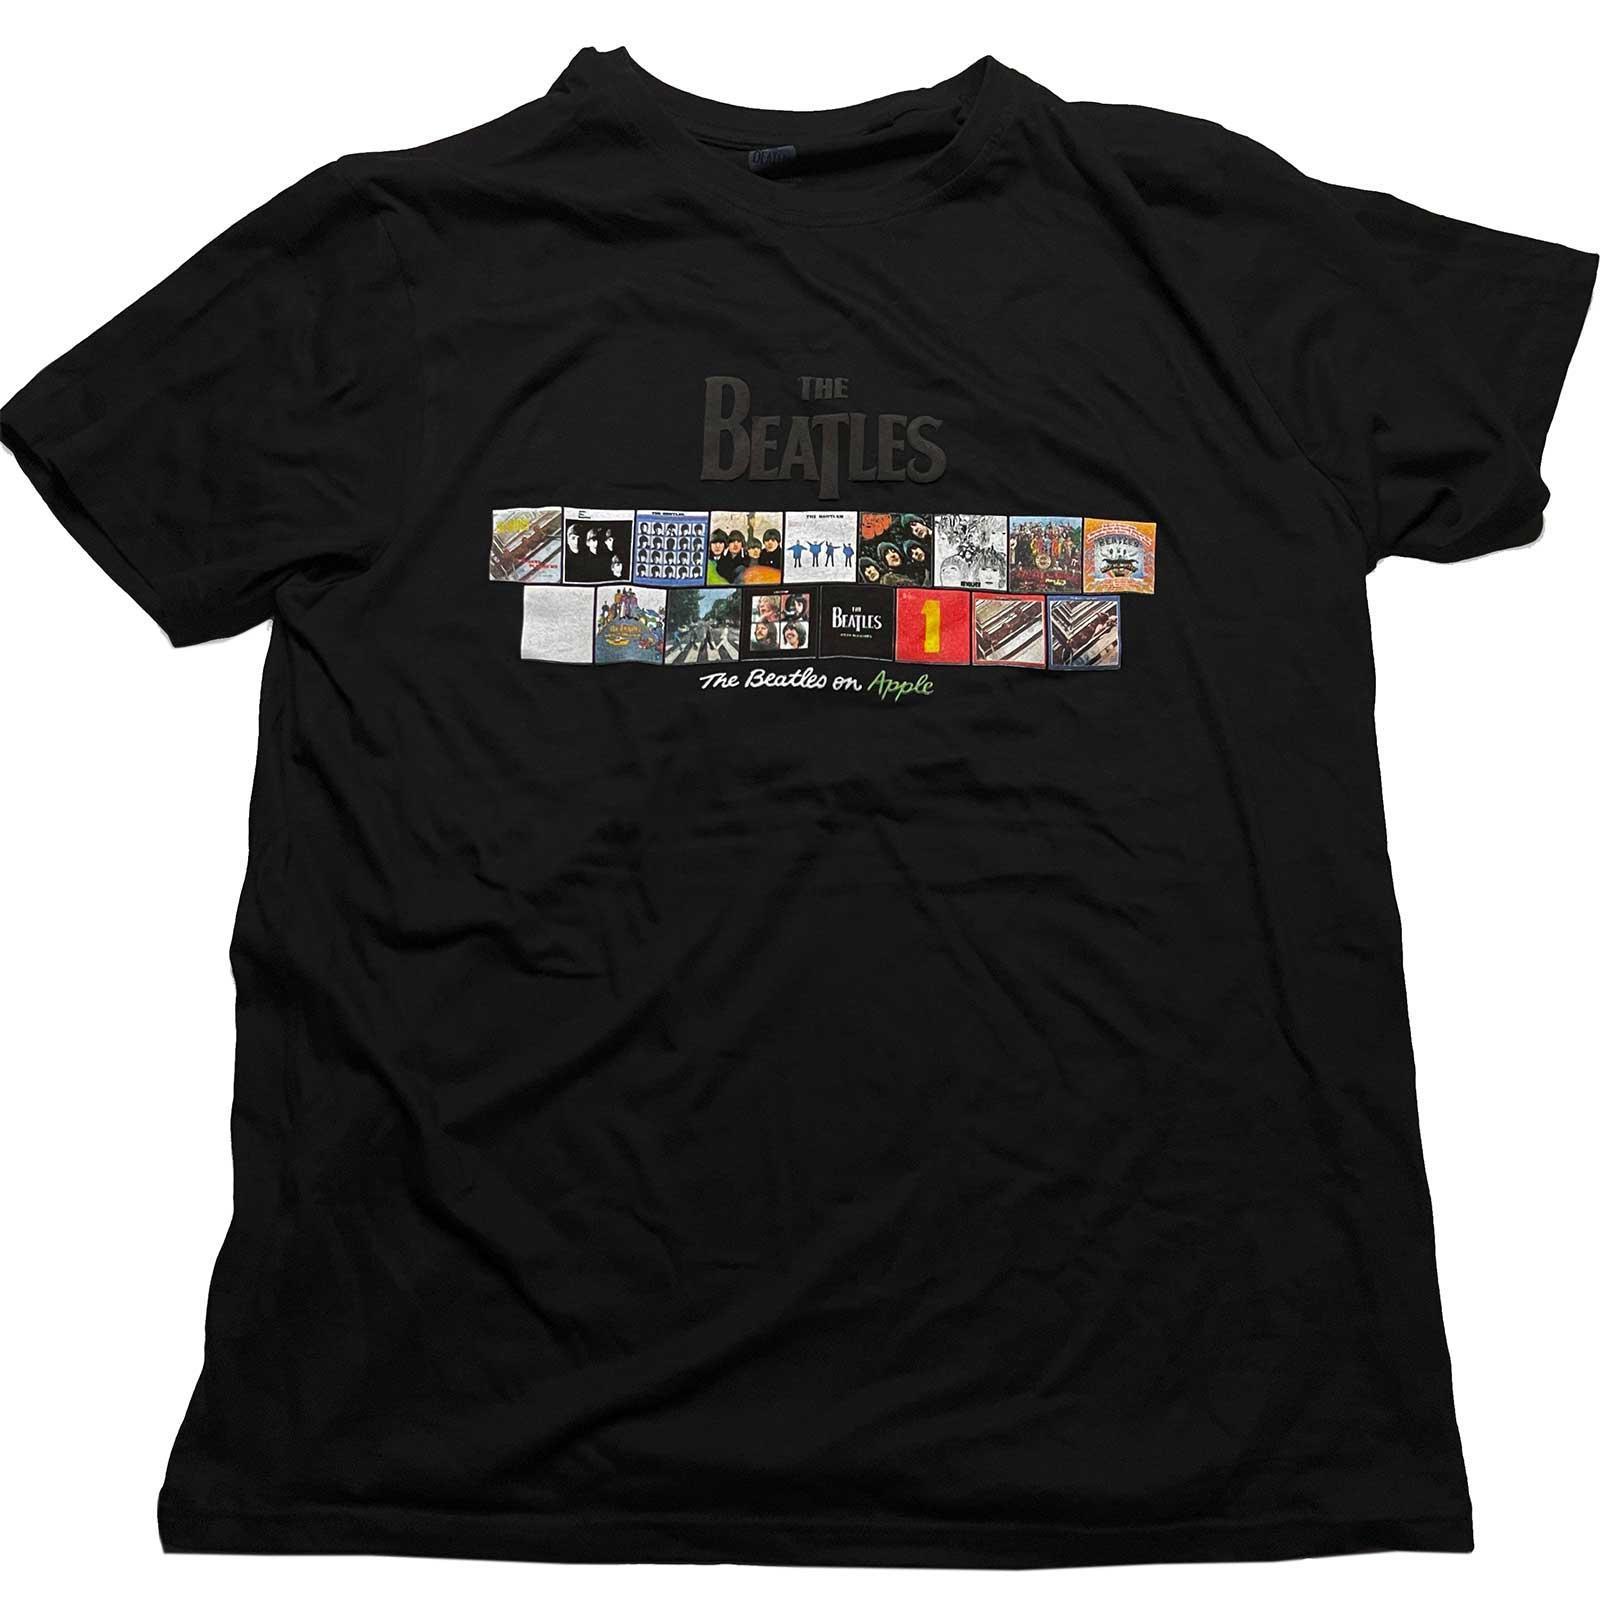 The Beatles Unisex Adult Albums on Apple Cotton T-Shirt (Black) (XXL)